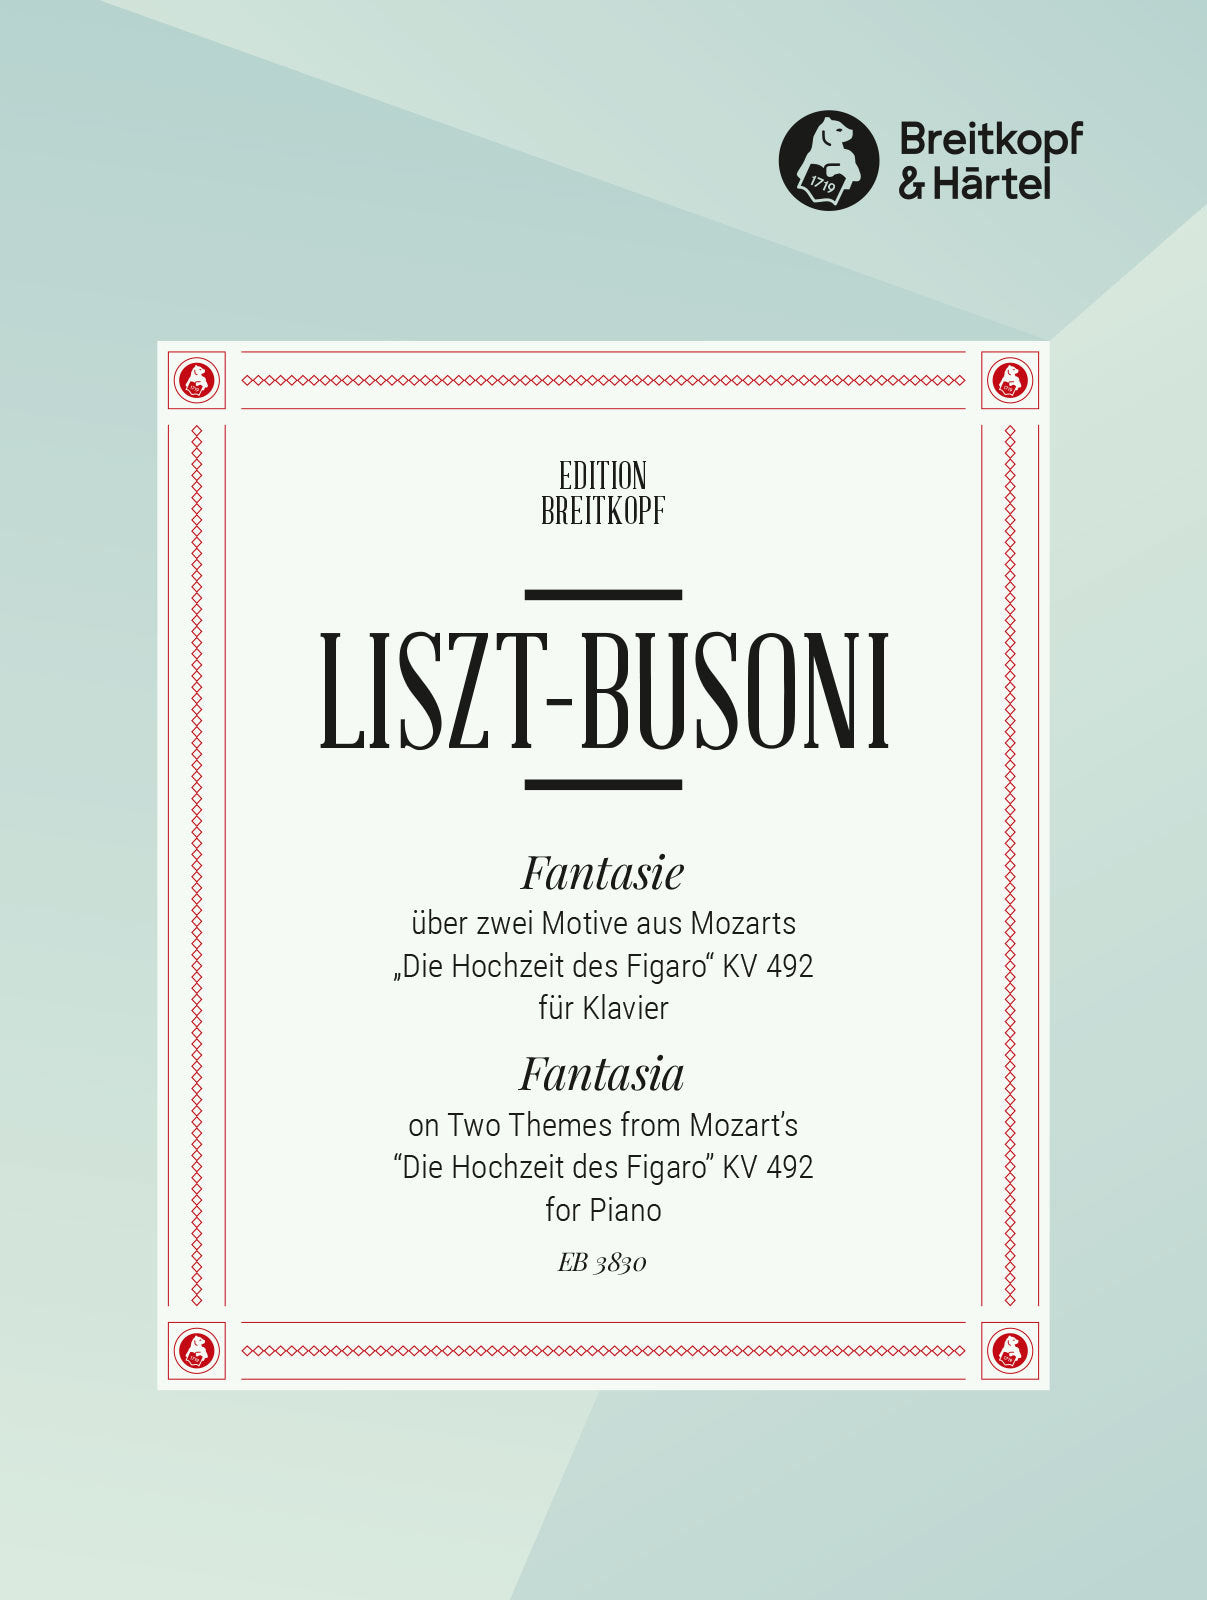 Liszt-Busoni: Fantasy on Themes from Mozart's "Figaro"